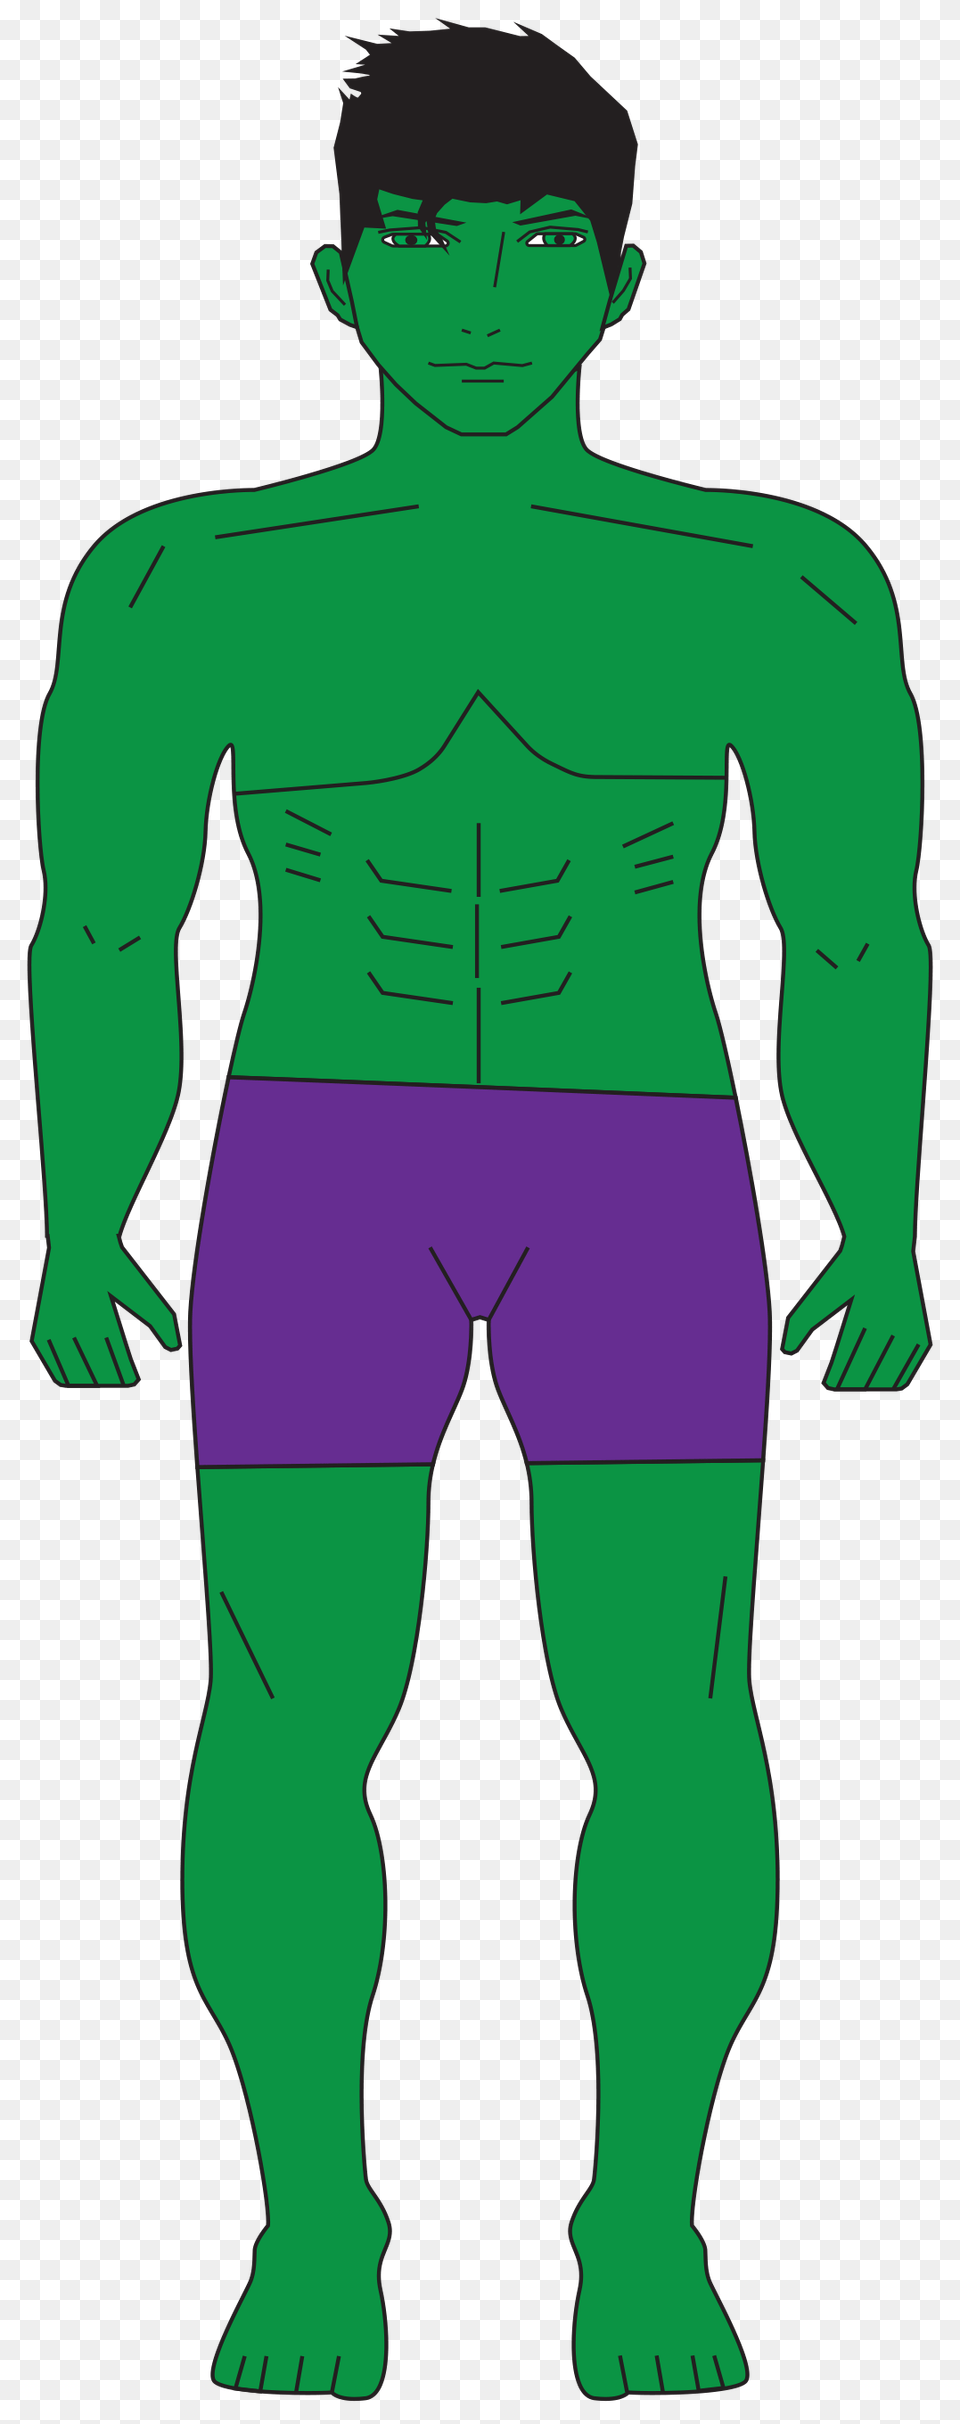 Hulk Marvel Comics, Green, Adult, Male, Man Png Image